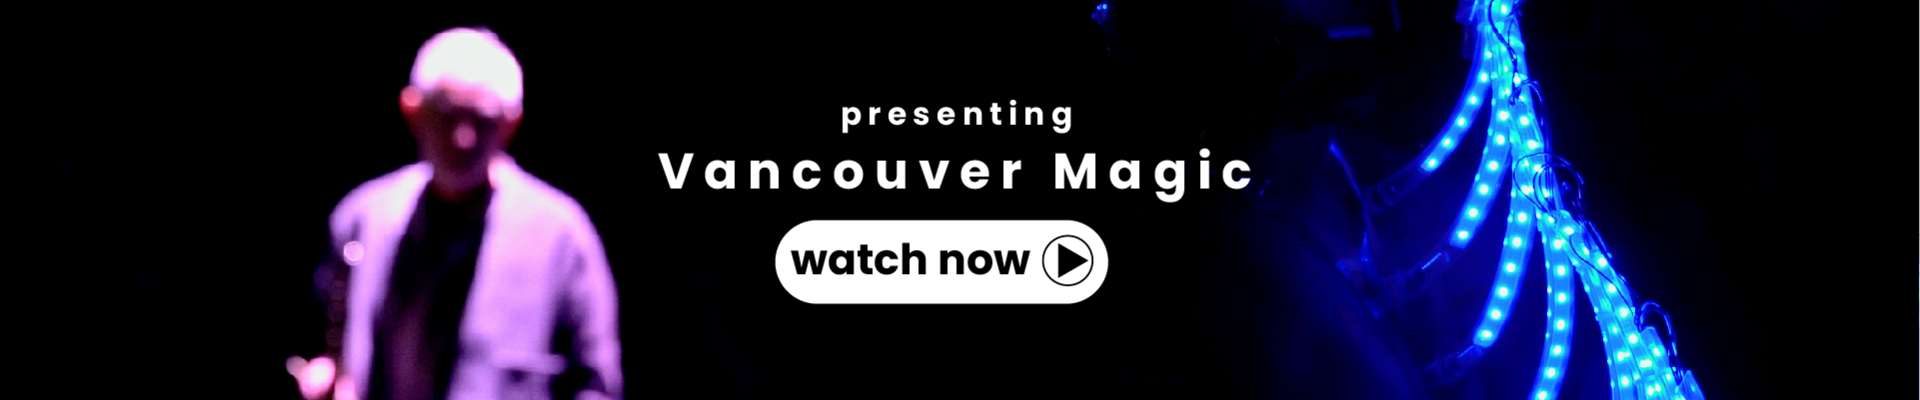 Vancouver Magic